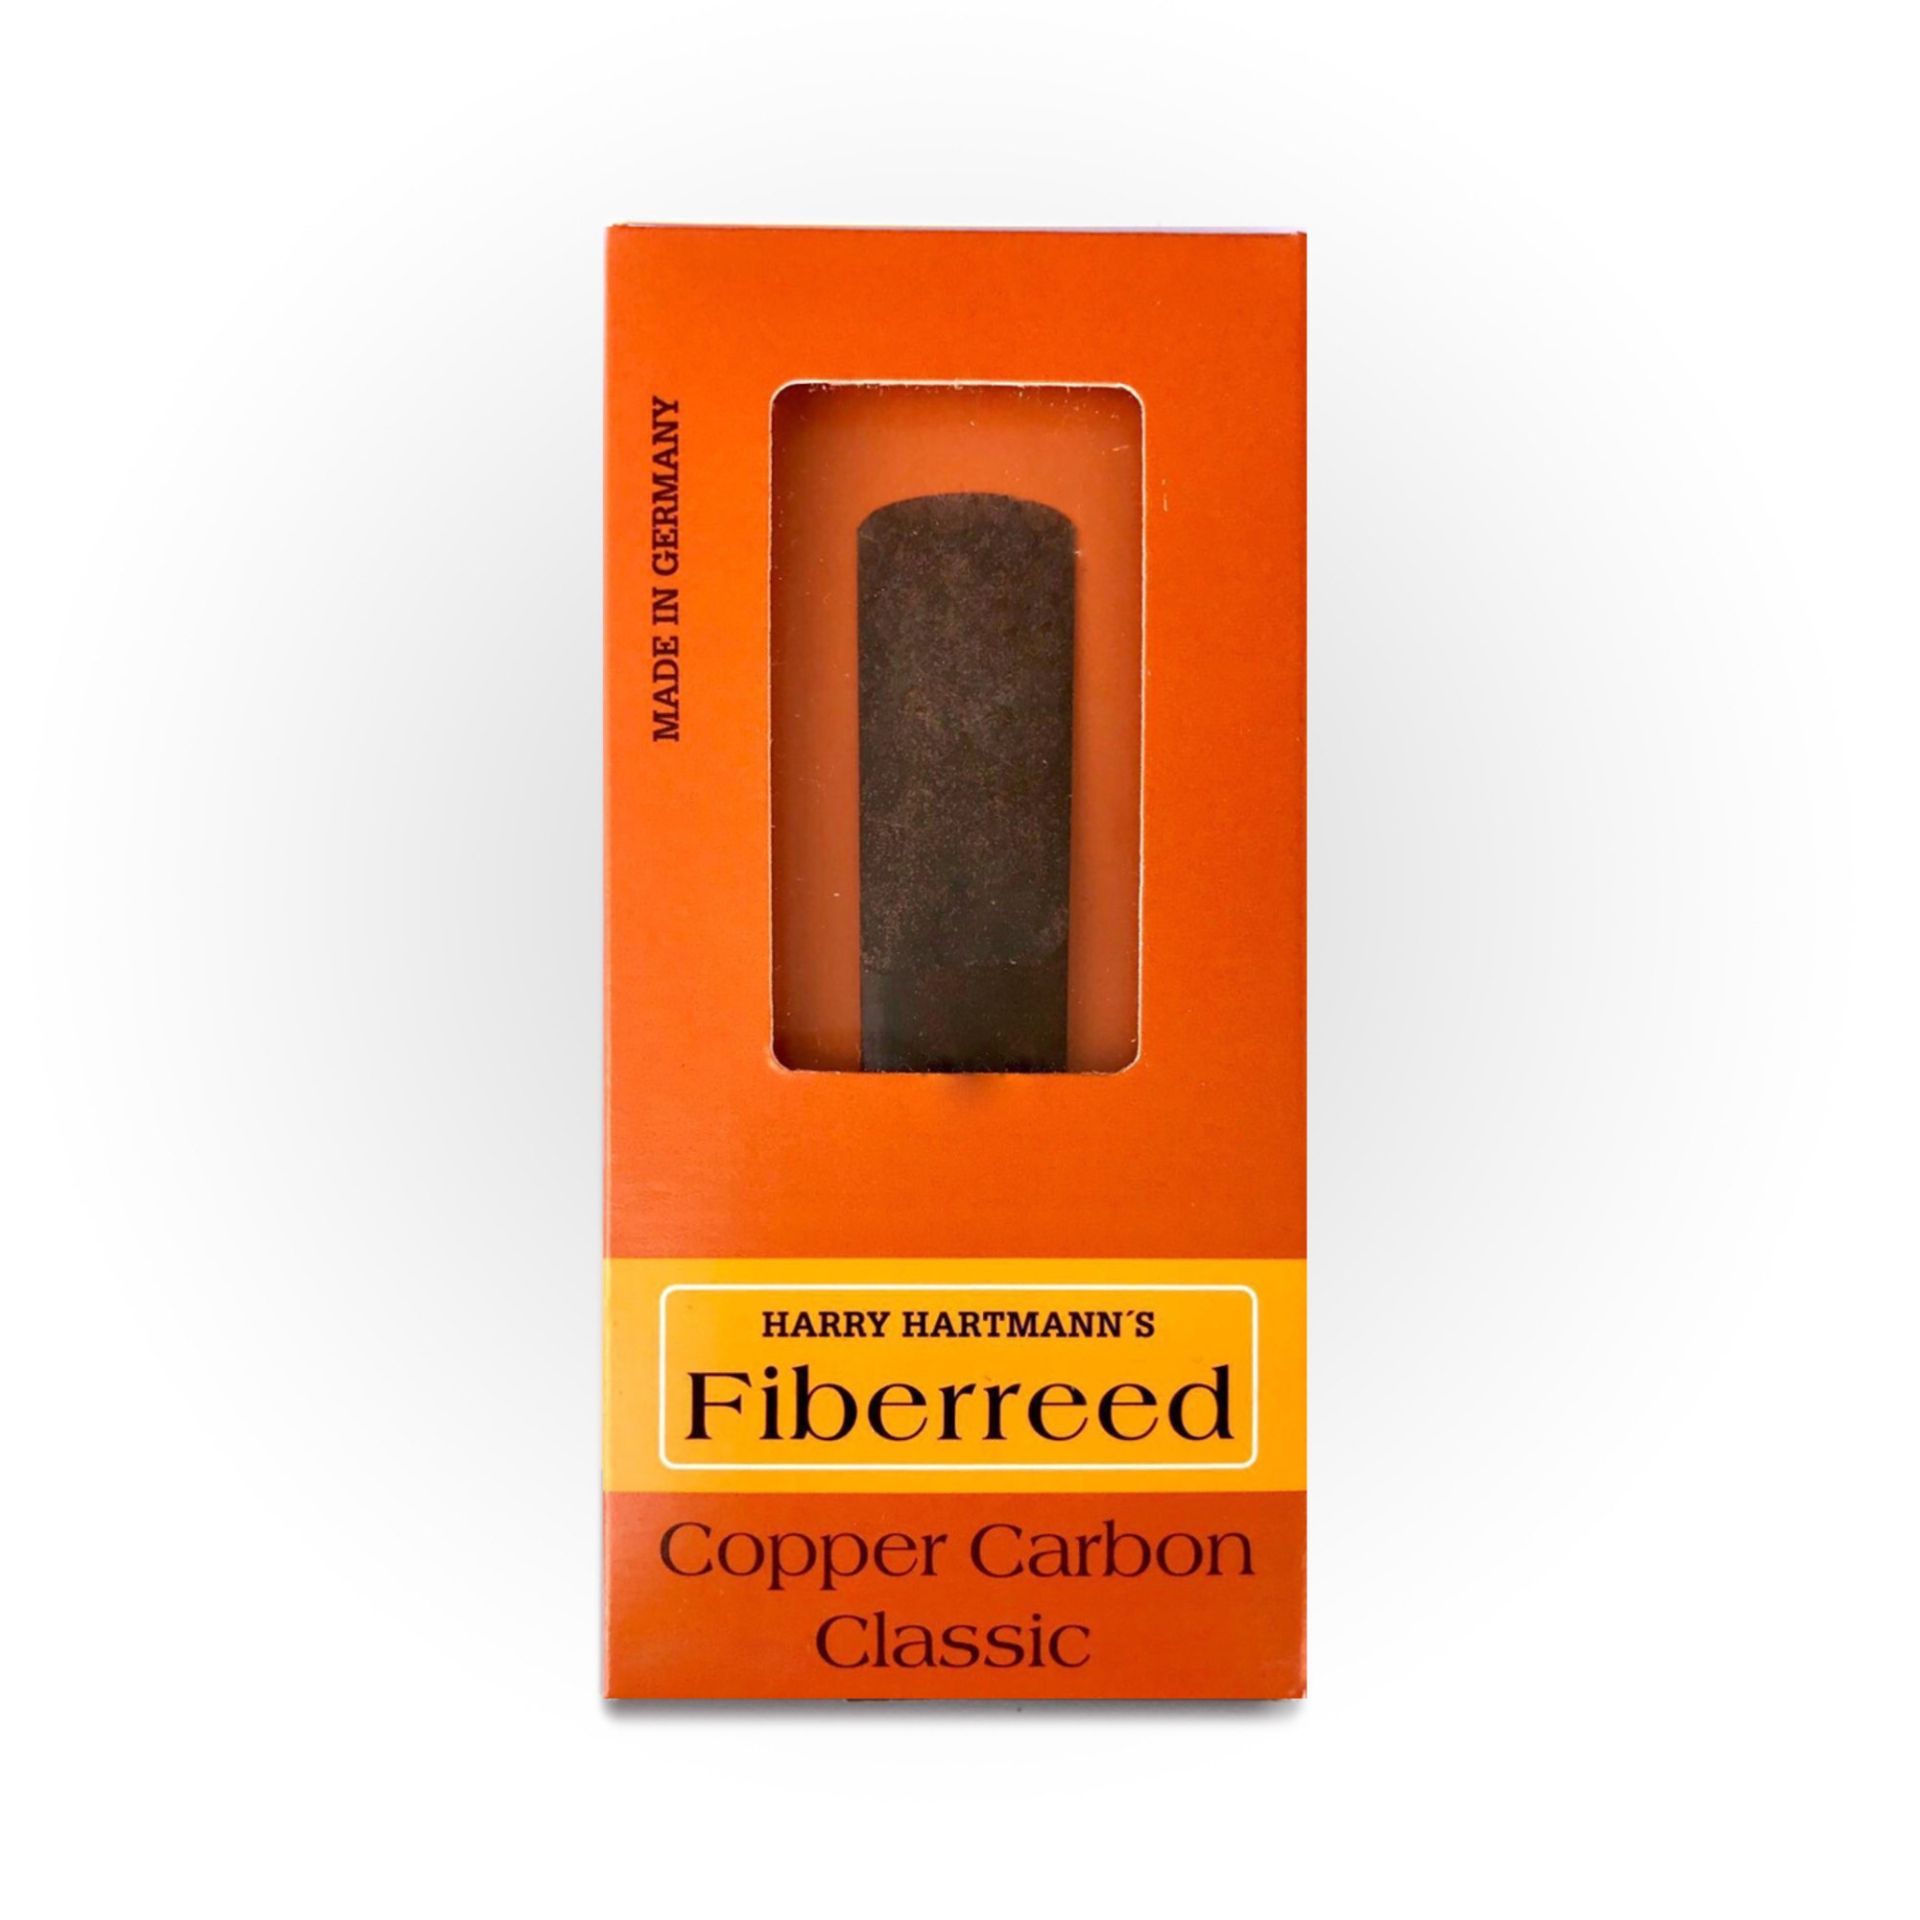 Harry Hartmann’s Fiberreed Copper Carbon Classic 2.0